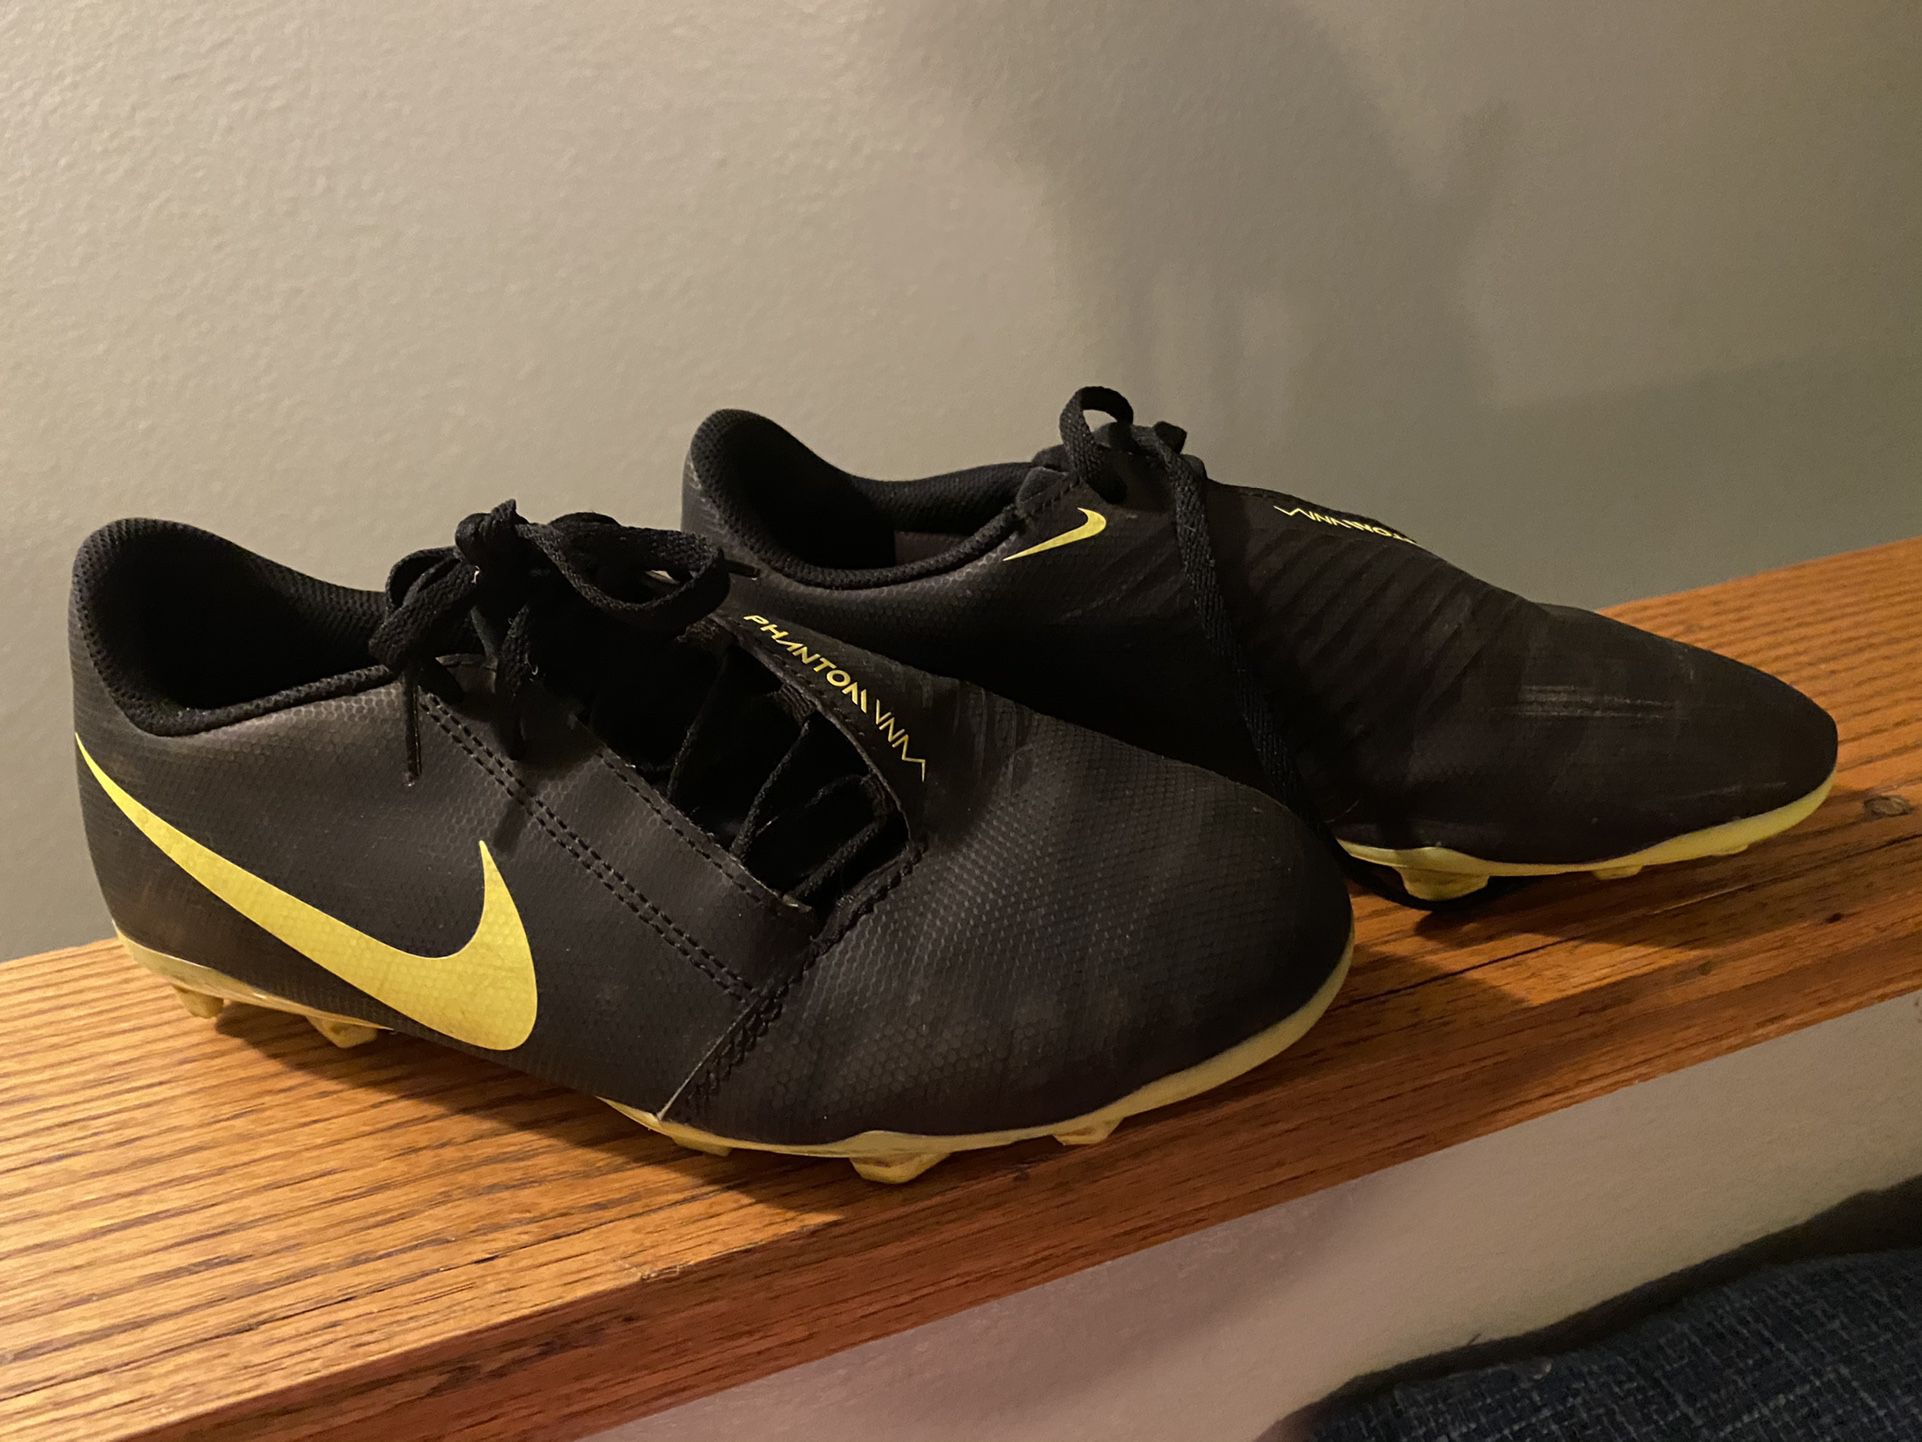 Boys’ Nike Soccer Cleats - Size 6